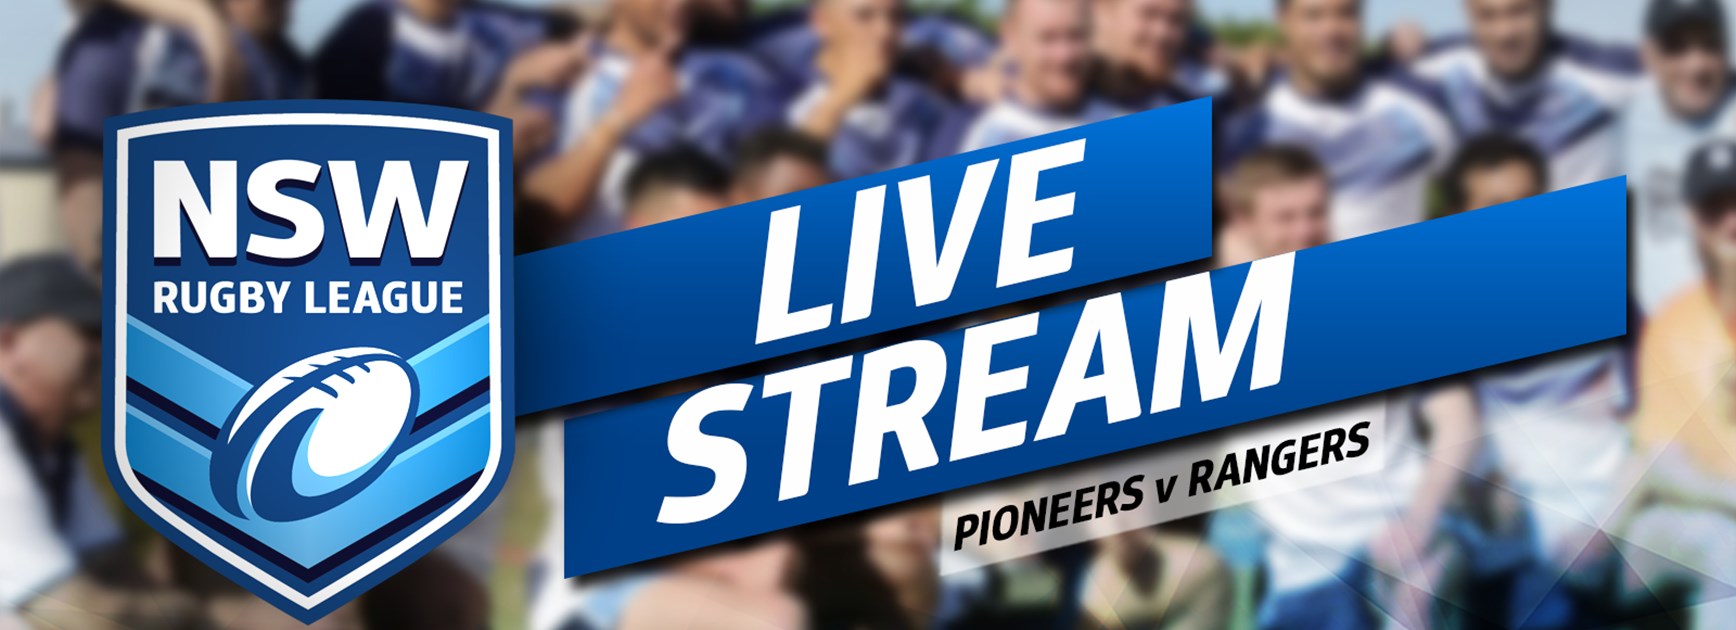 Live stream QLD Rangers V NSW Pioneers